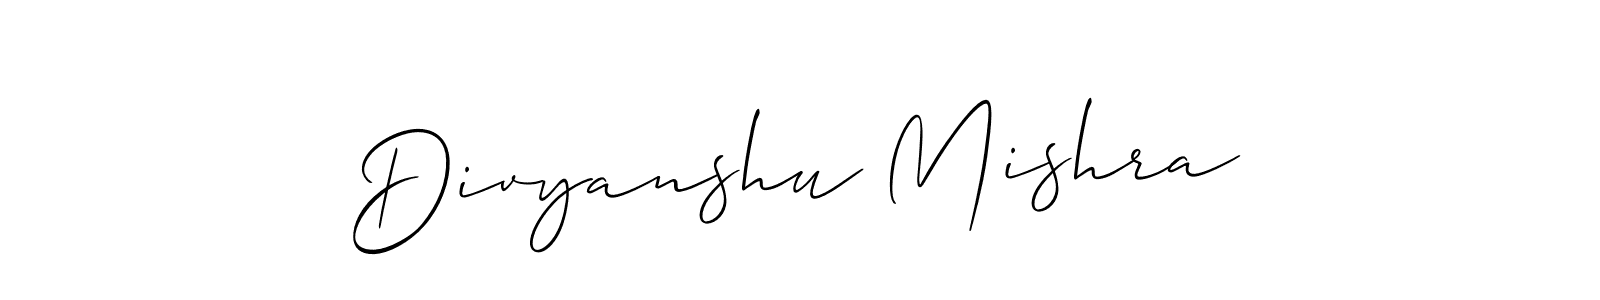 How to make Divyanshu Mishra signature? Allison_Script is a professional autograph style. Create handwritten signature for Divyanshu Mishra name. Divyanshu Mishra signature style 2 images and pictures png